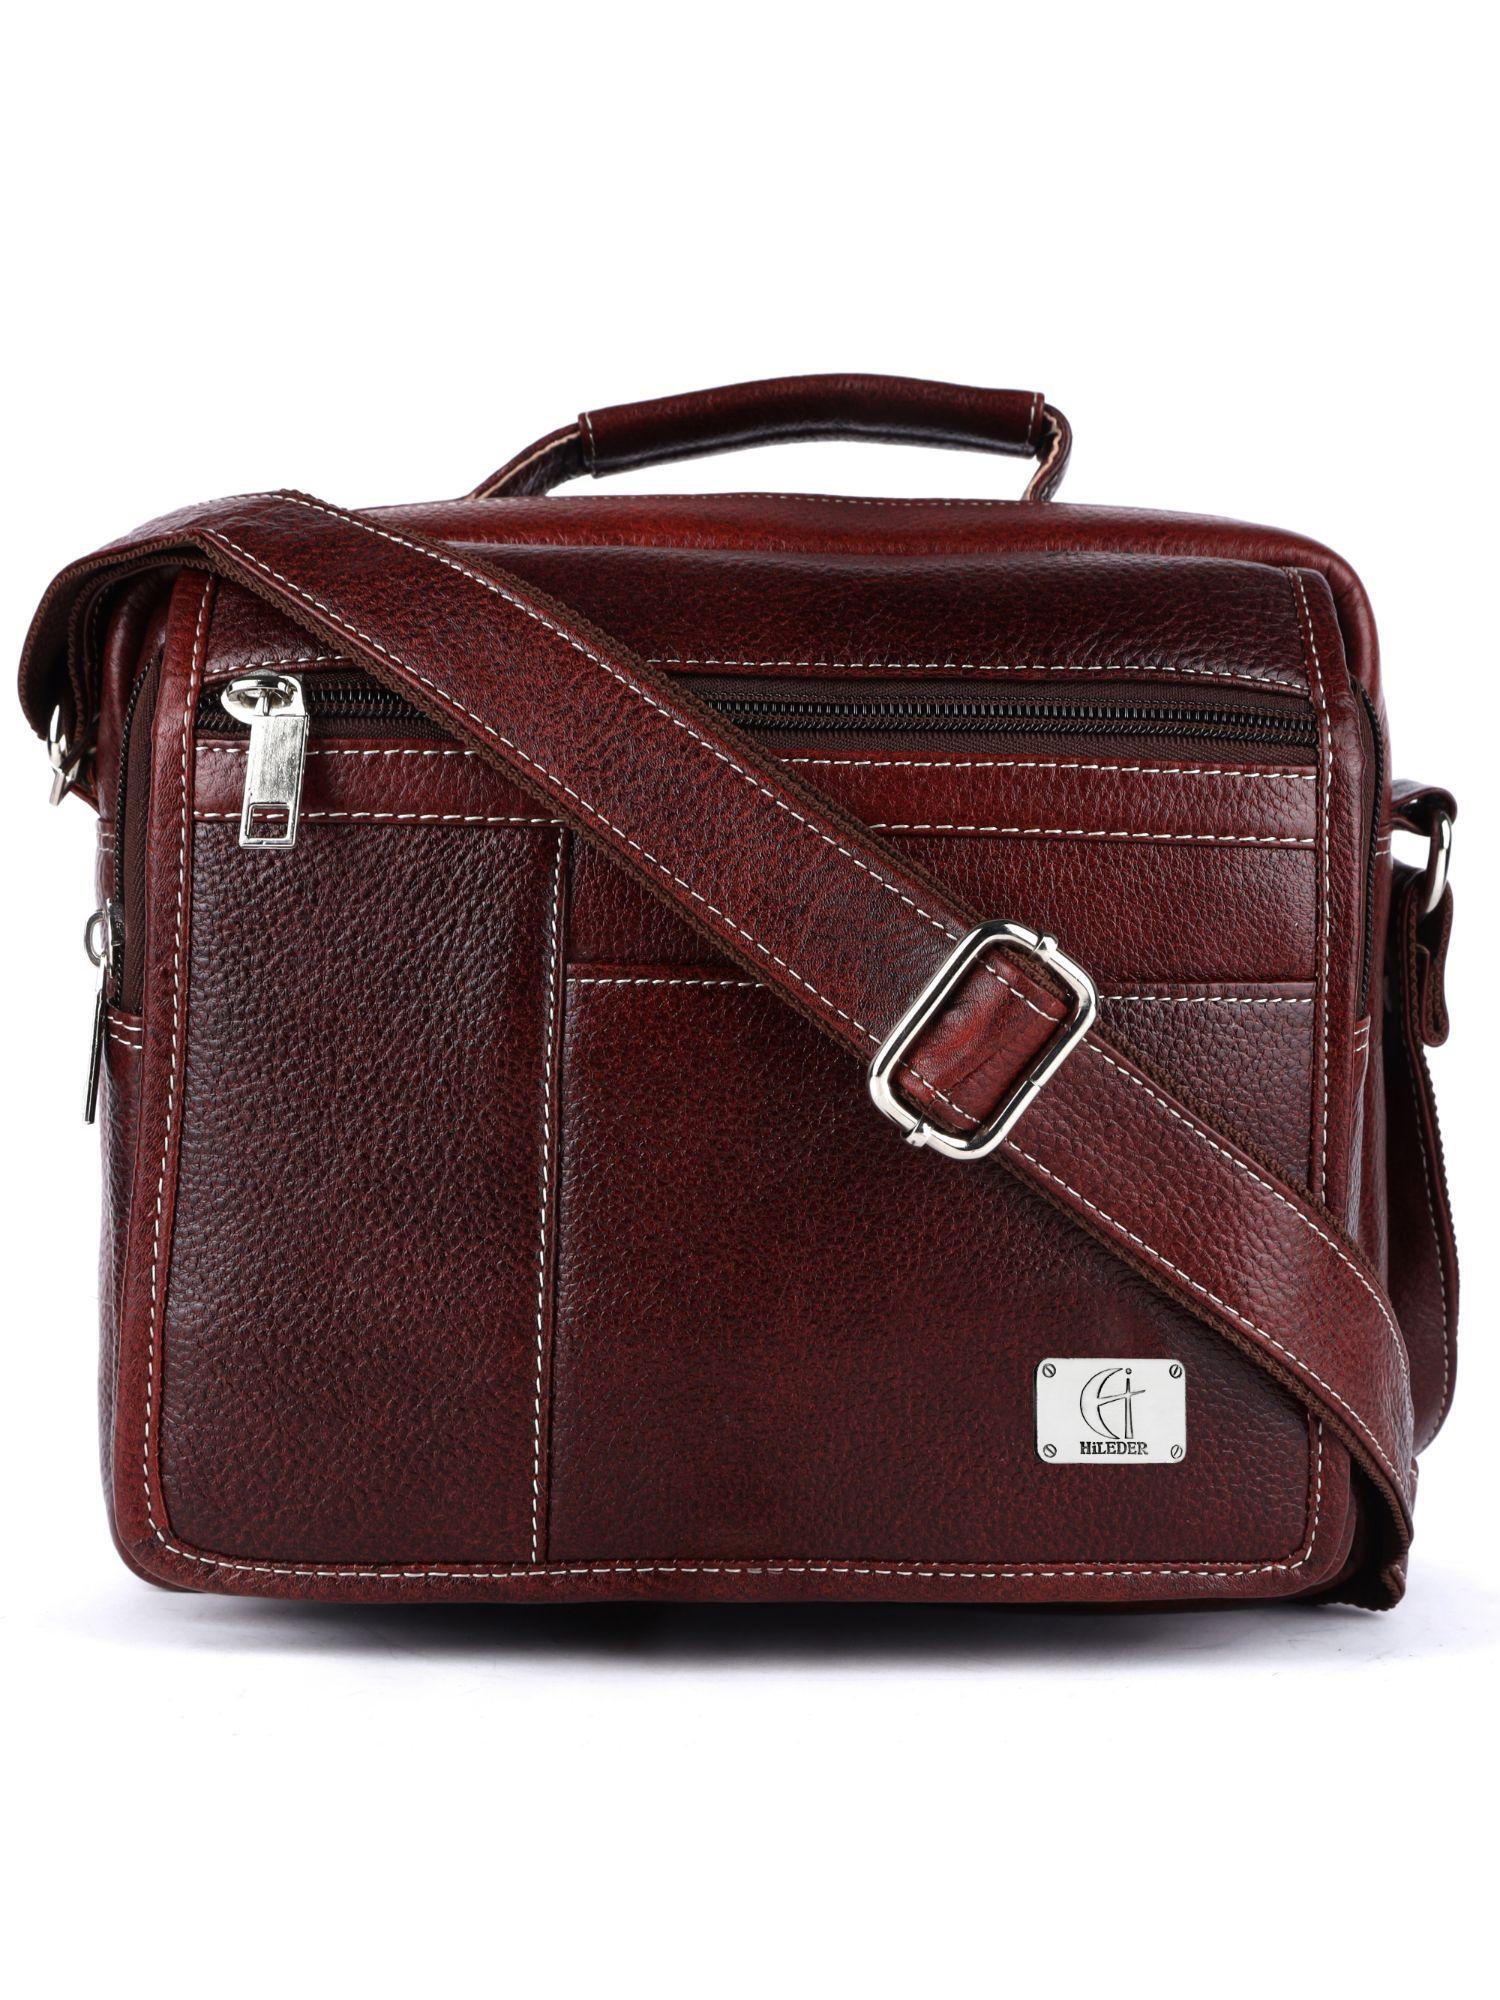 pure leather messenger unisex 10 inch sling cross body travel office handbag brown